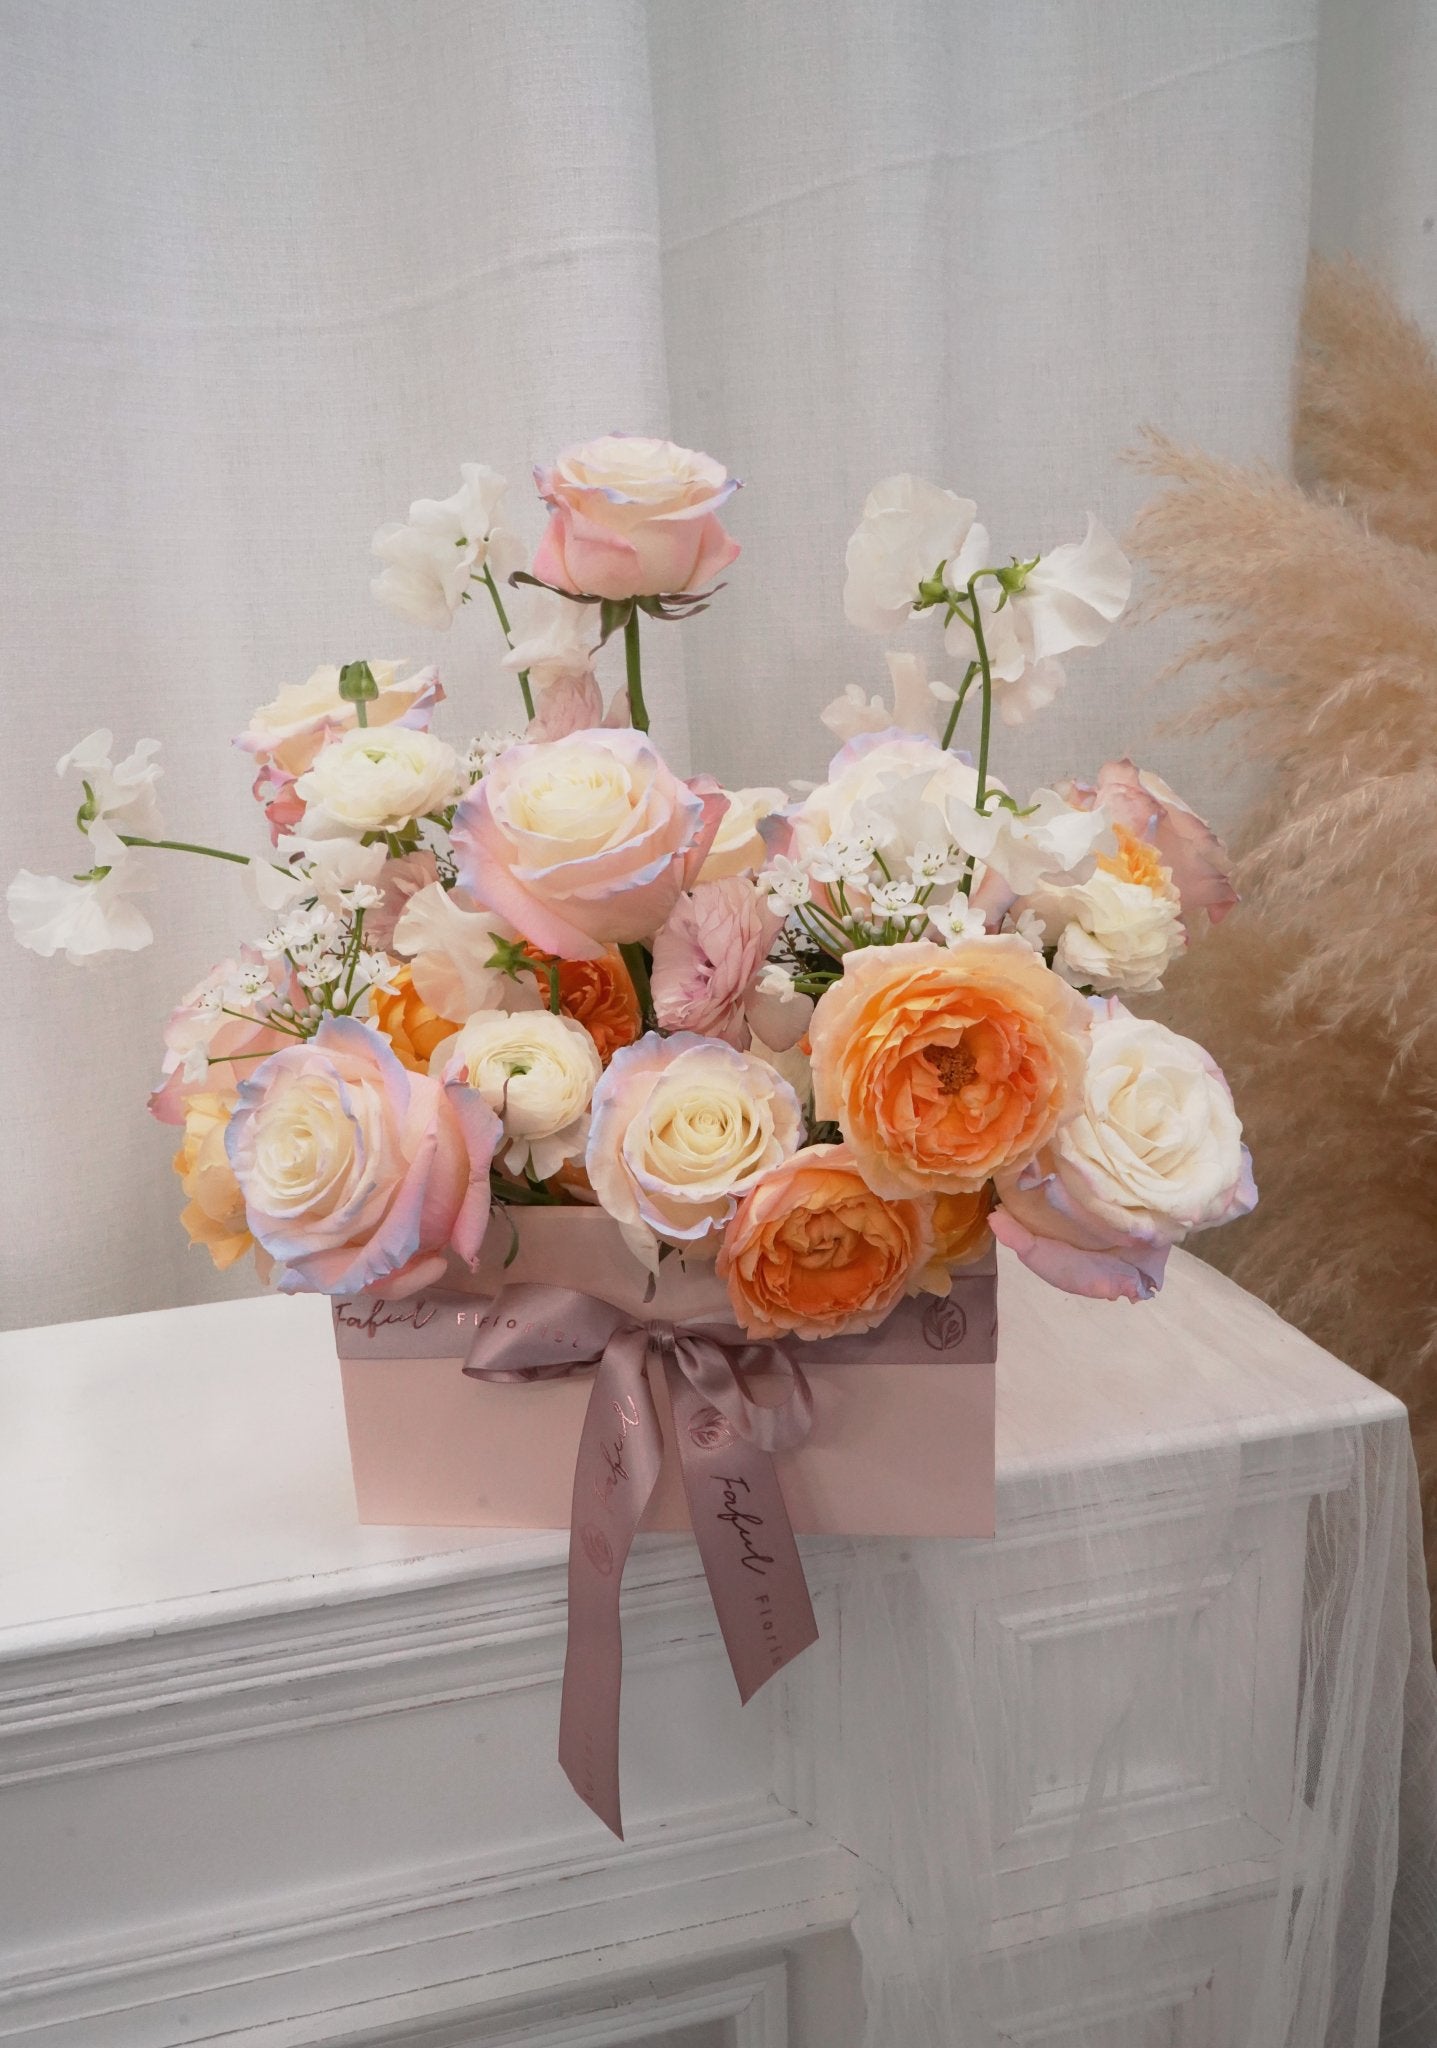 Honey love | Unicorn Rose - Fresh flowers, Roses- Honey love -  Feather - 2023vday - Surprise Box - 2